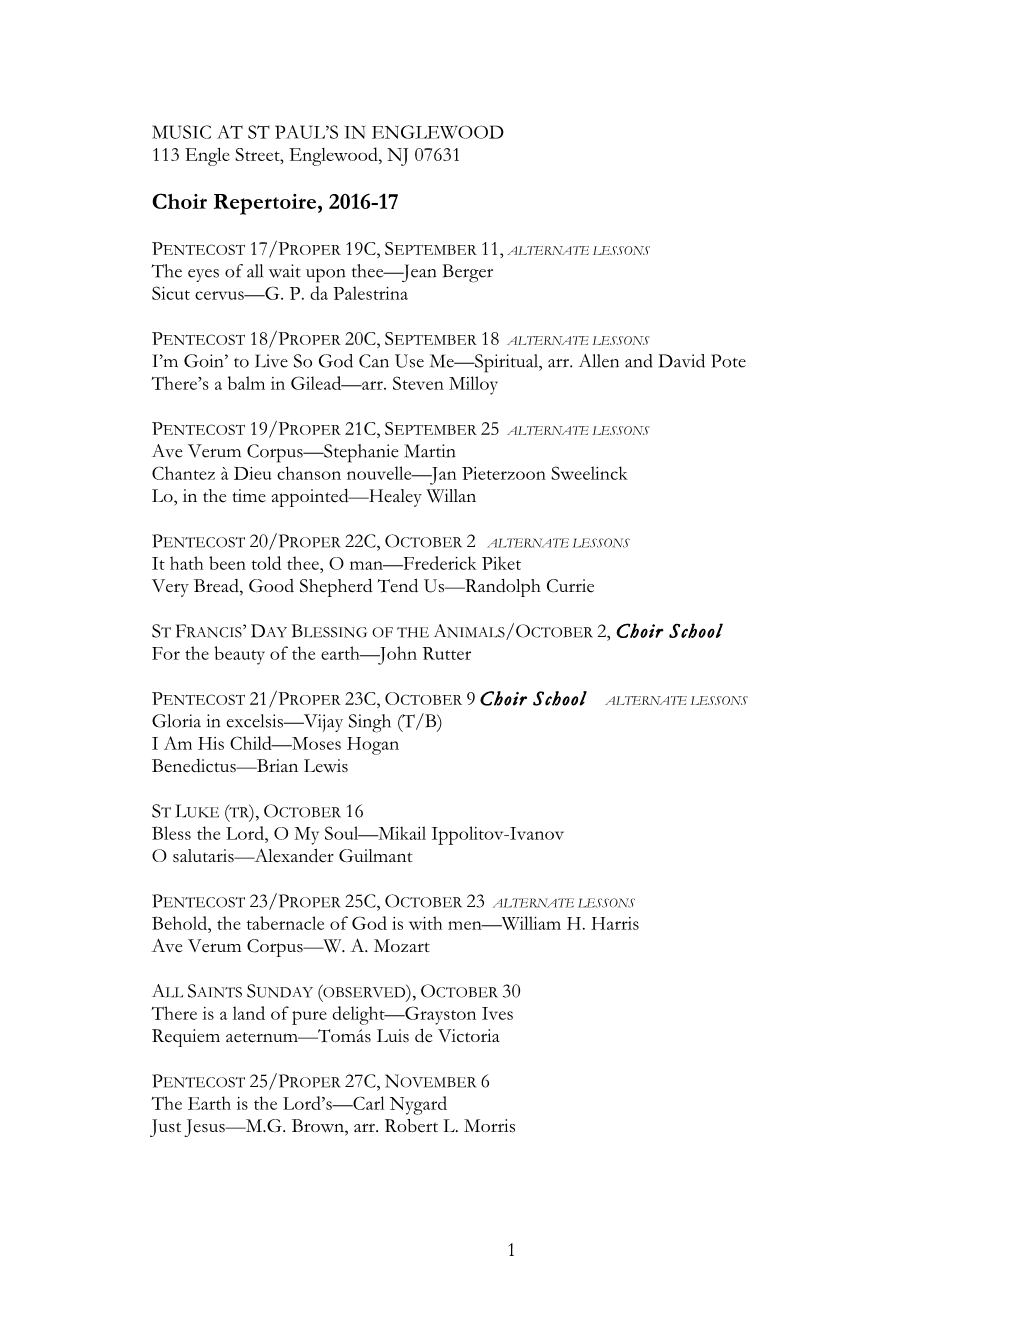 Choir Repertoire, 2016-17